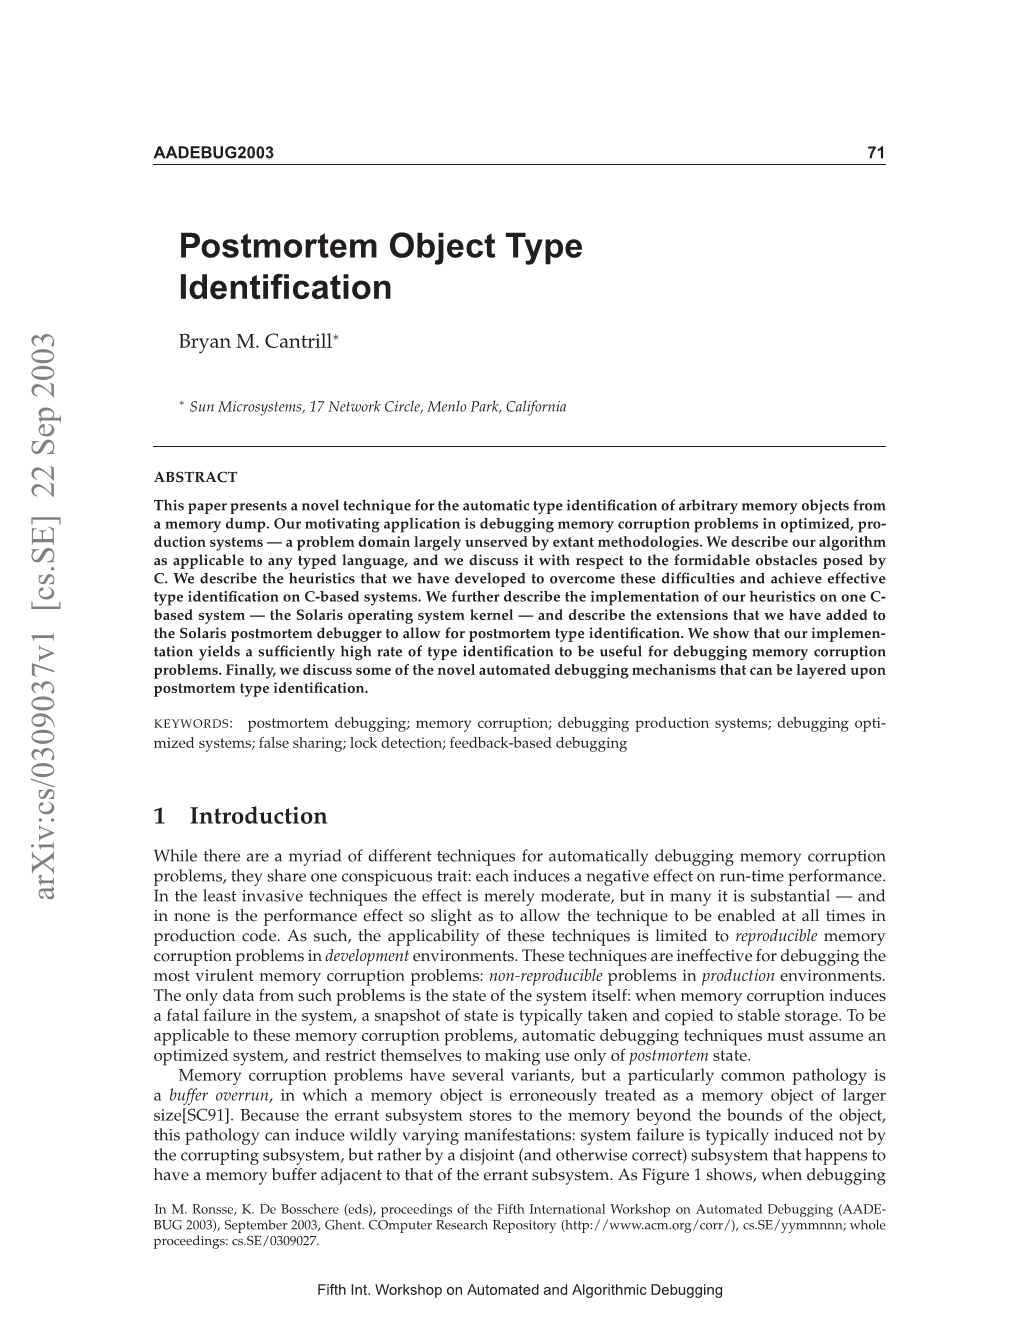 [Cs.SE] 22 Sep 2003 Postmortem Object Type Identification